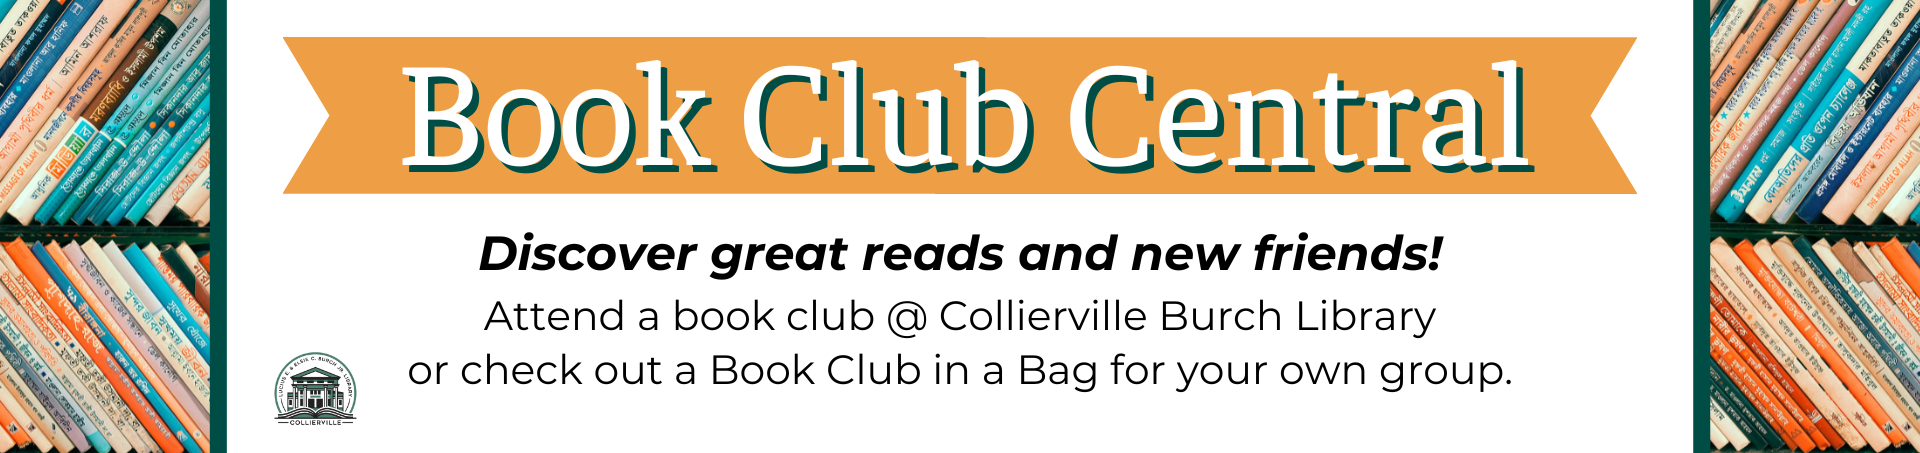 Book Club Central Banner